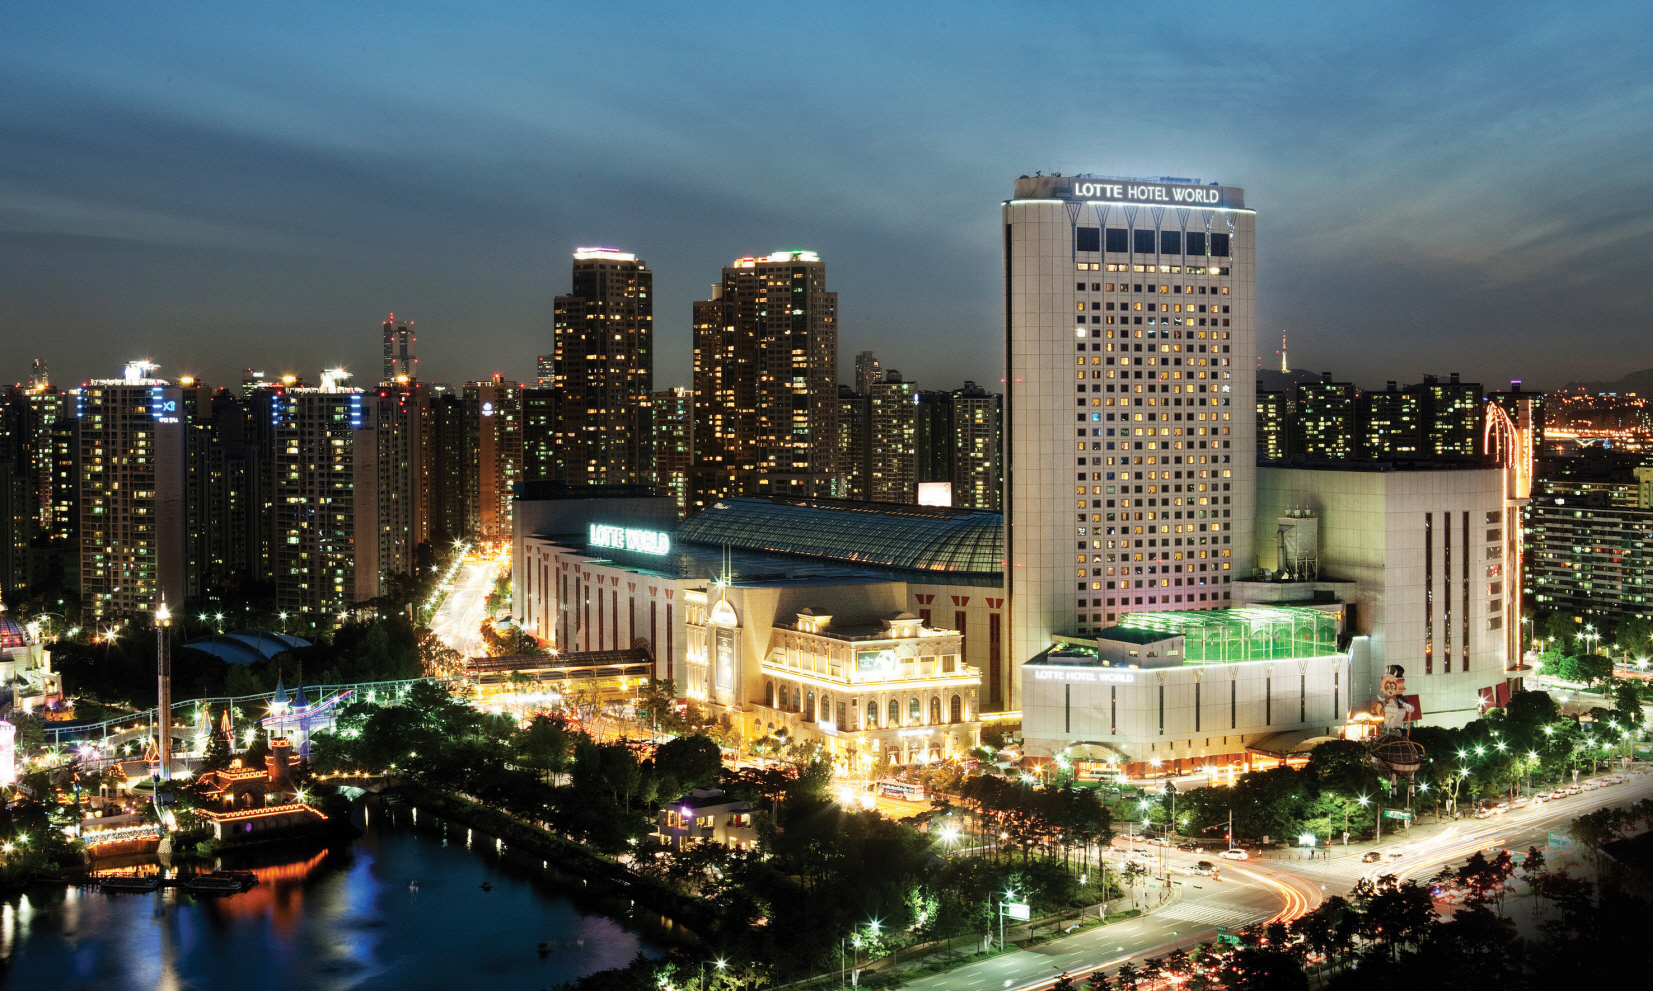 Seoul’s Lotte Hotel expansion incorporates Symetrix SymNet Edge